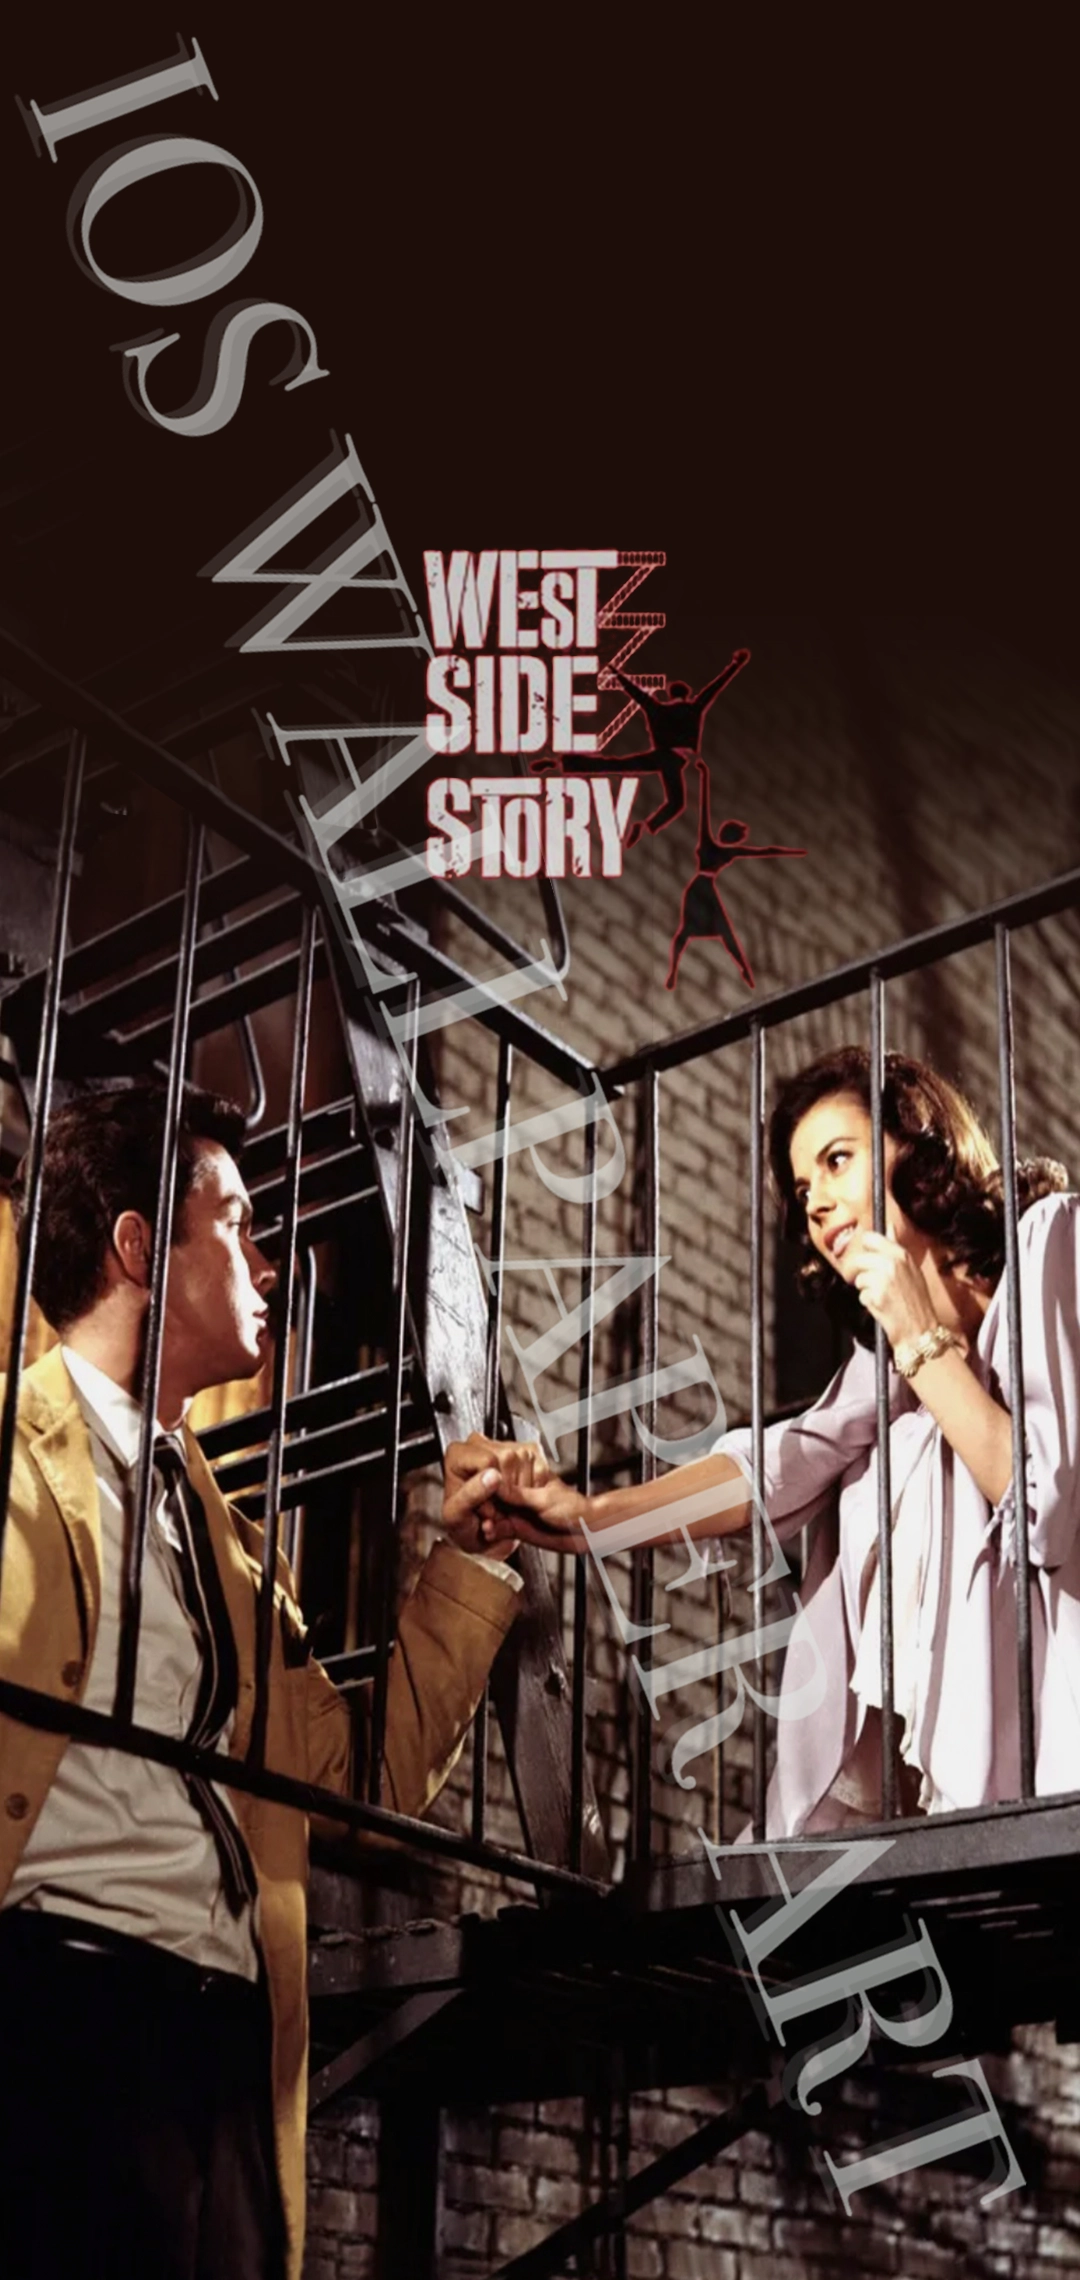 West Side Story (1961) - Plum's Digital Art